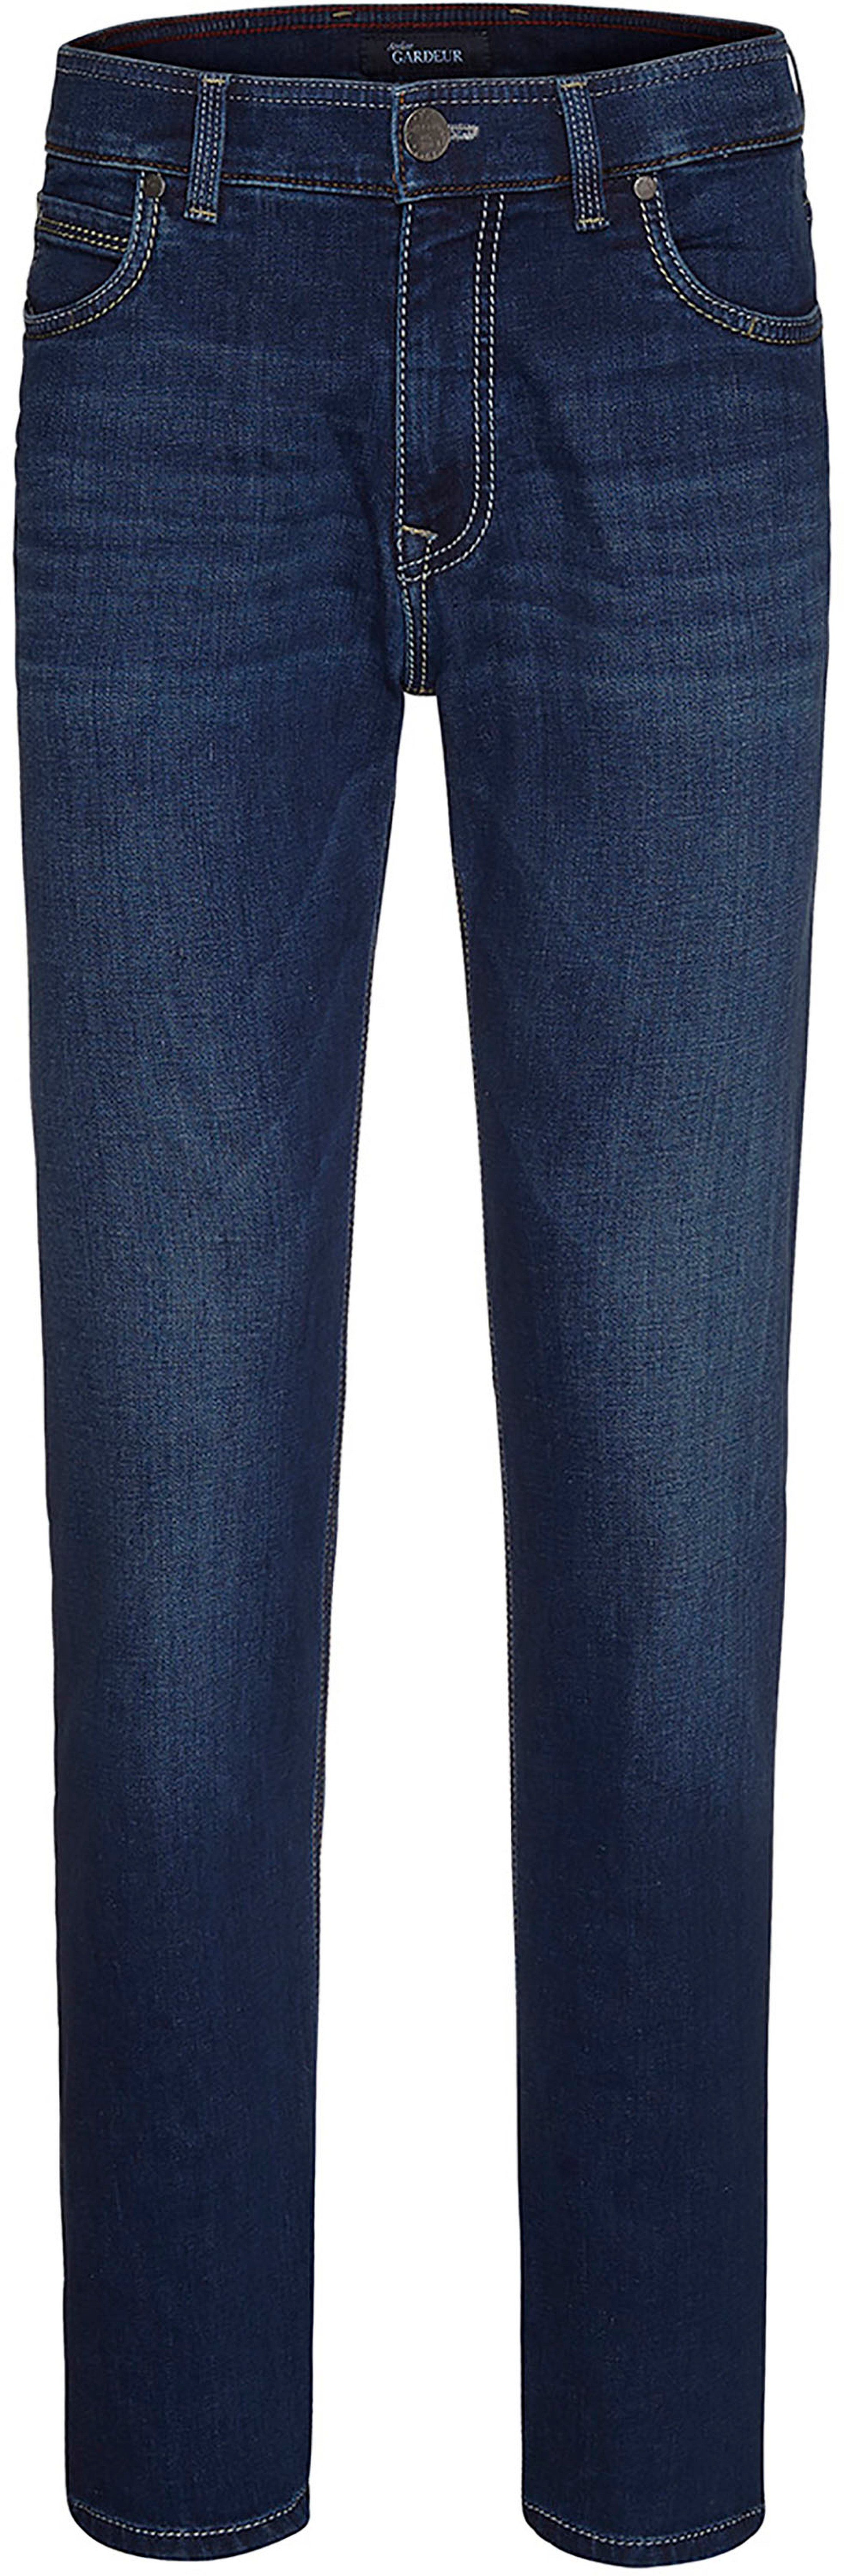 Gardeur Batu Pants Marine Blue Dark Blue size W 31